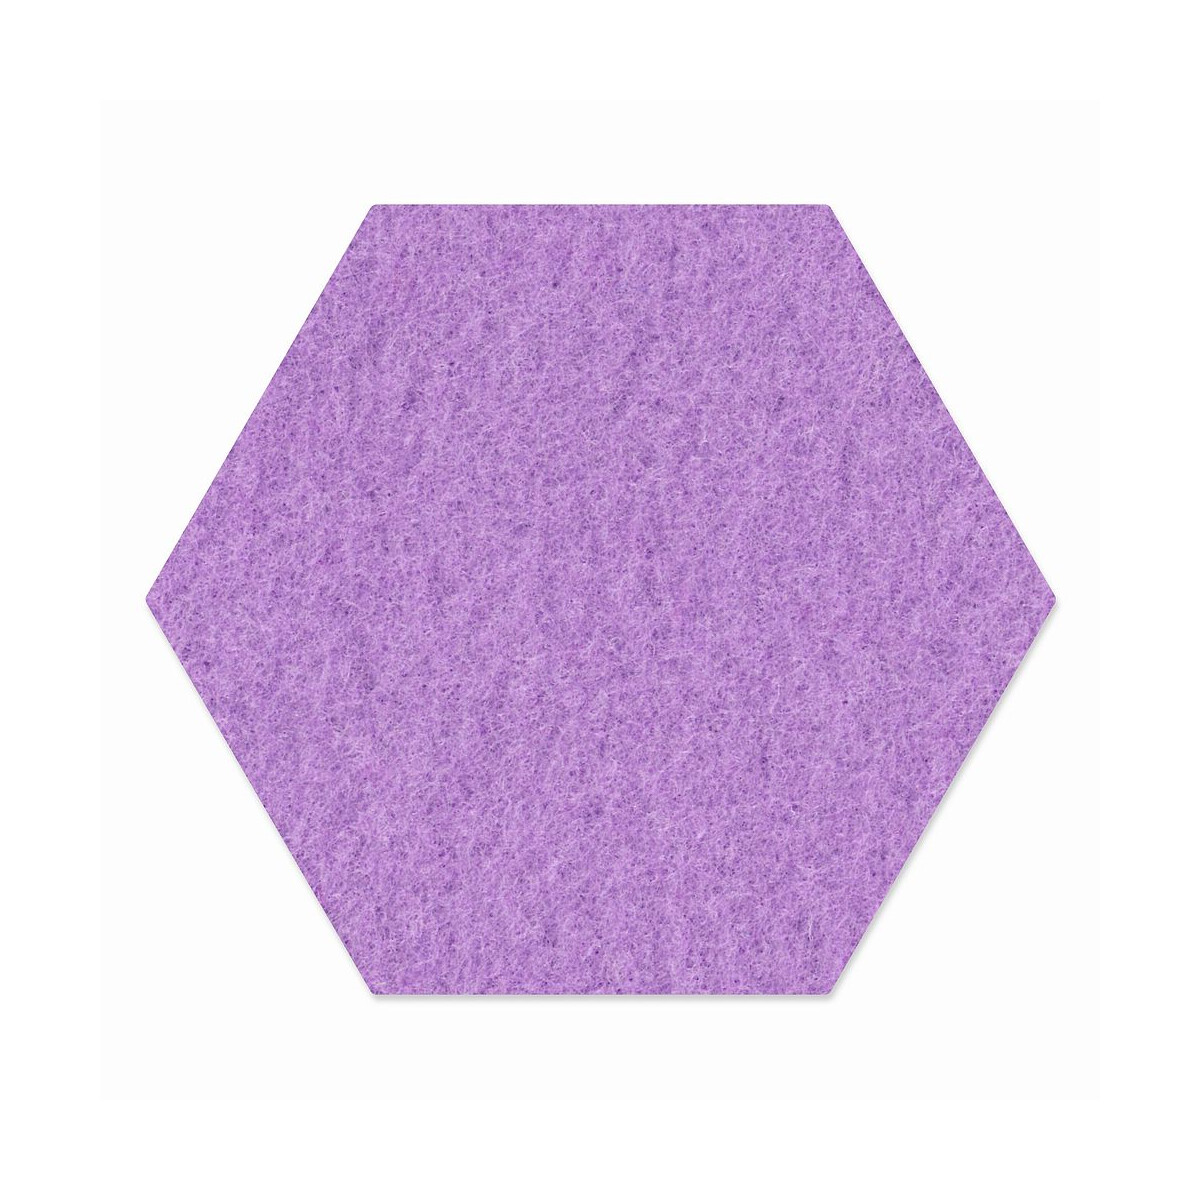 1 x FILZ Untersetzer Wabe, Hexagon 15 cm - lavendel